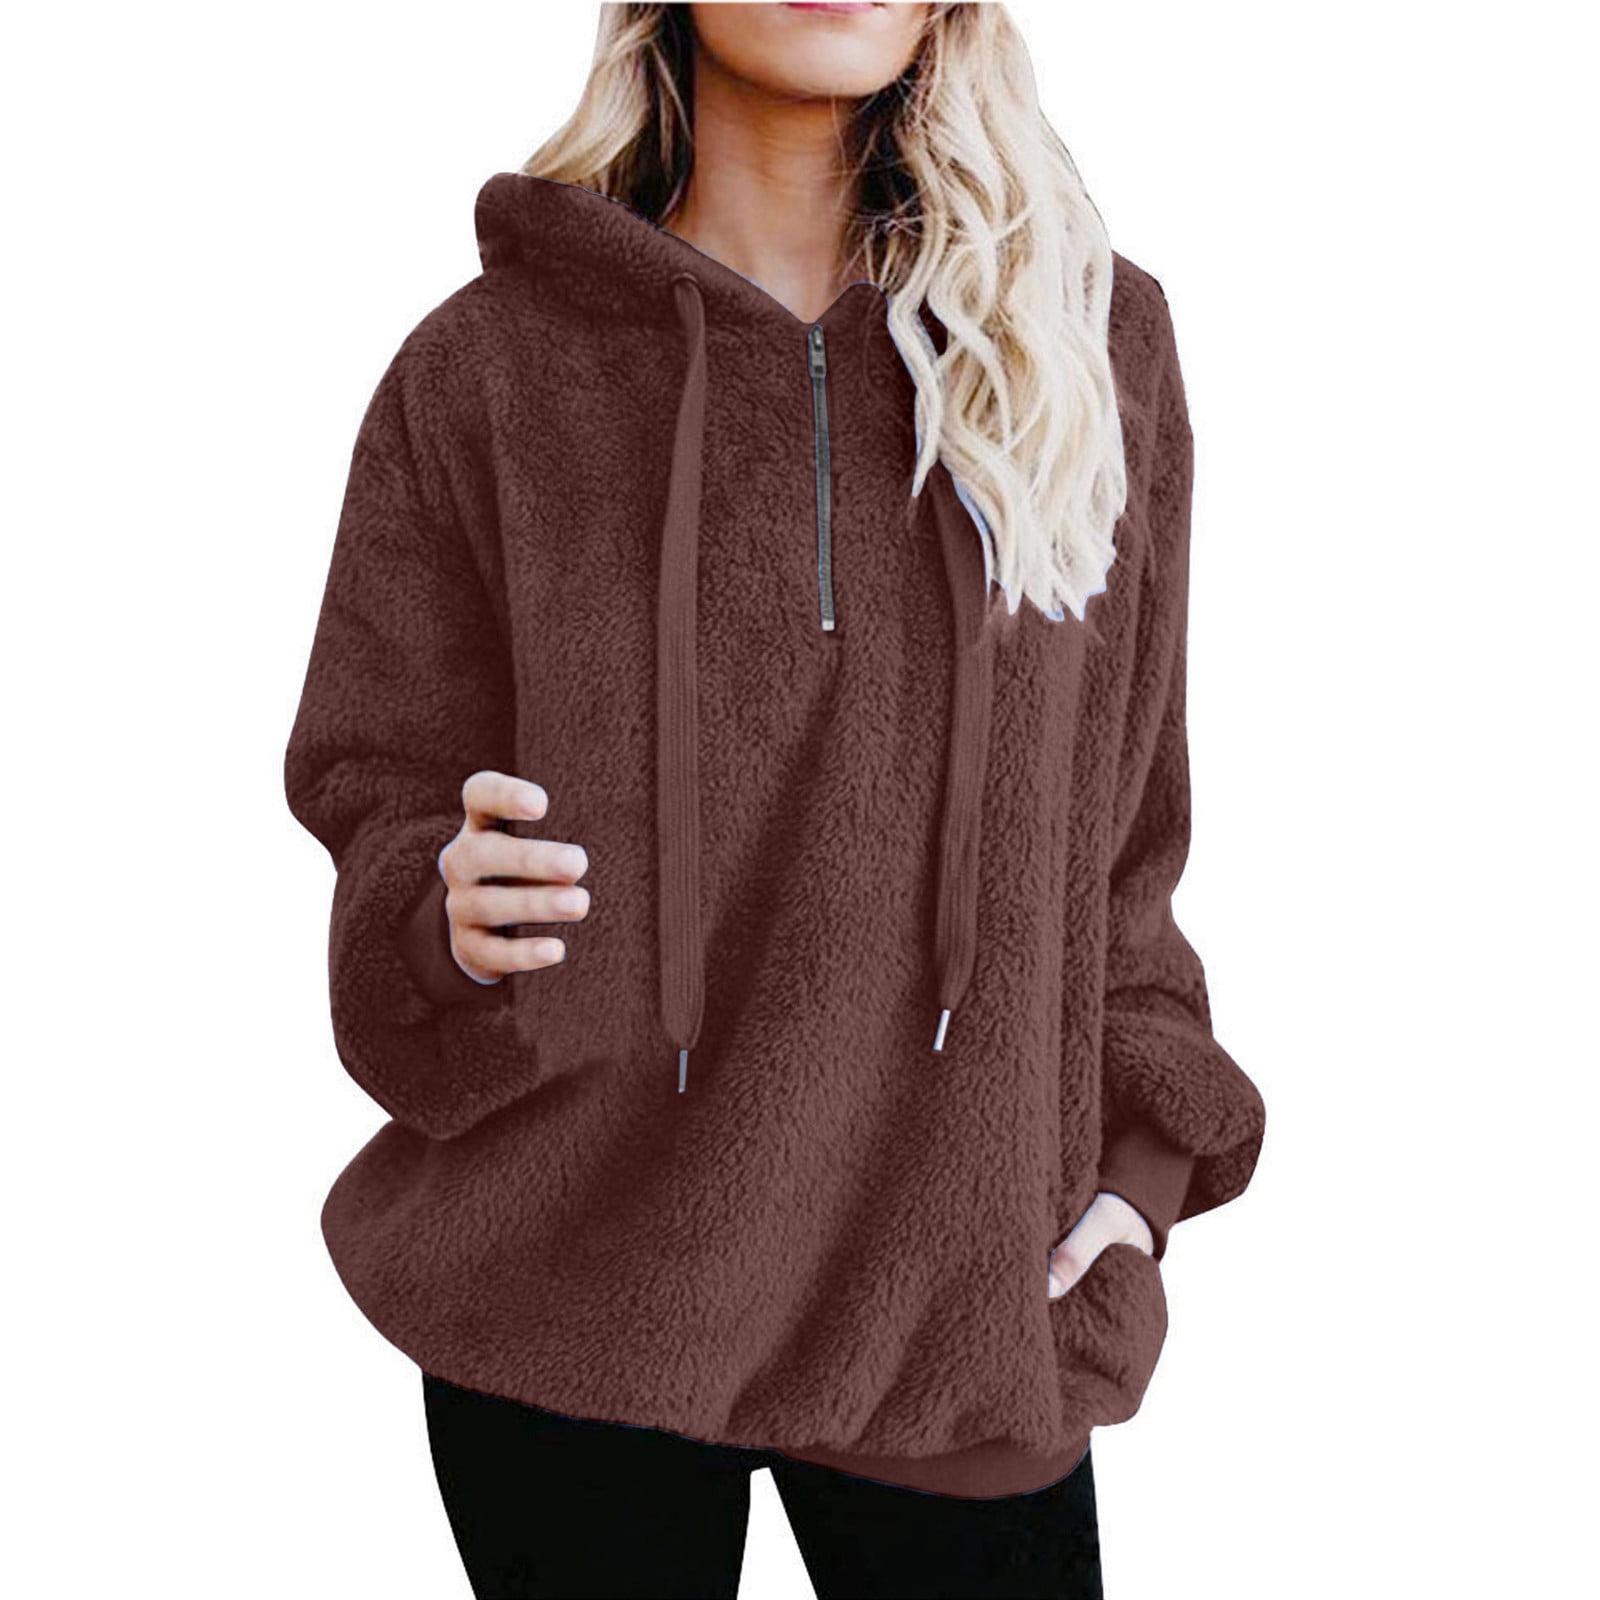 tklpehg Womens Winter Warm Fleece Hoodies Trendy Solid Color Casual  Sweatshirt Double-Sided Fleece Zipper Hooded Drawstring with Pocket  Sweatshirt